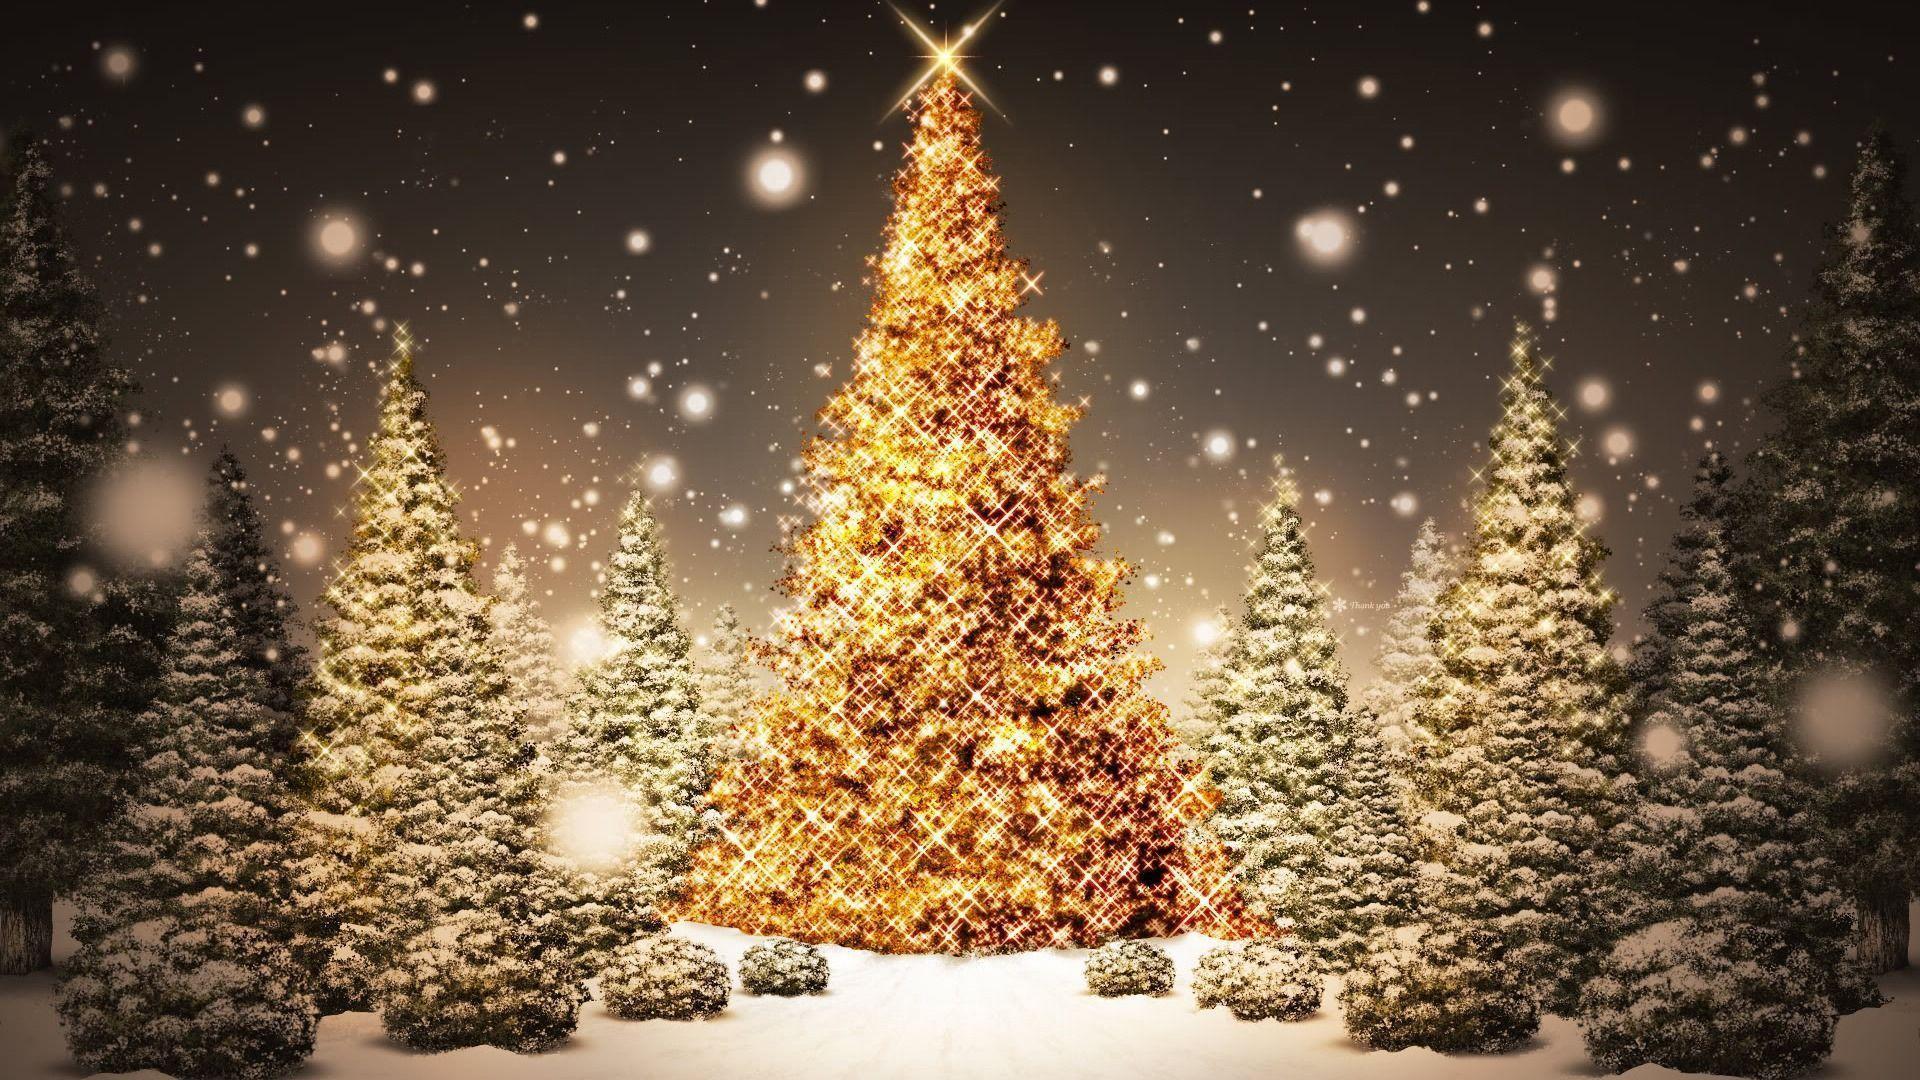 Free Winter Christmas Trees Wallpaper, Free Winter Christmas